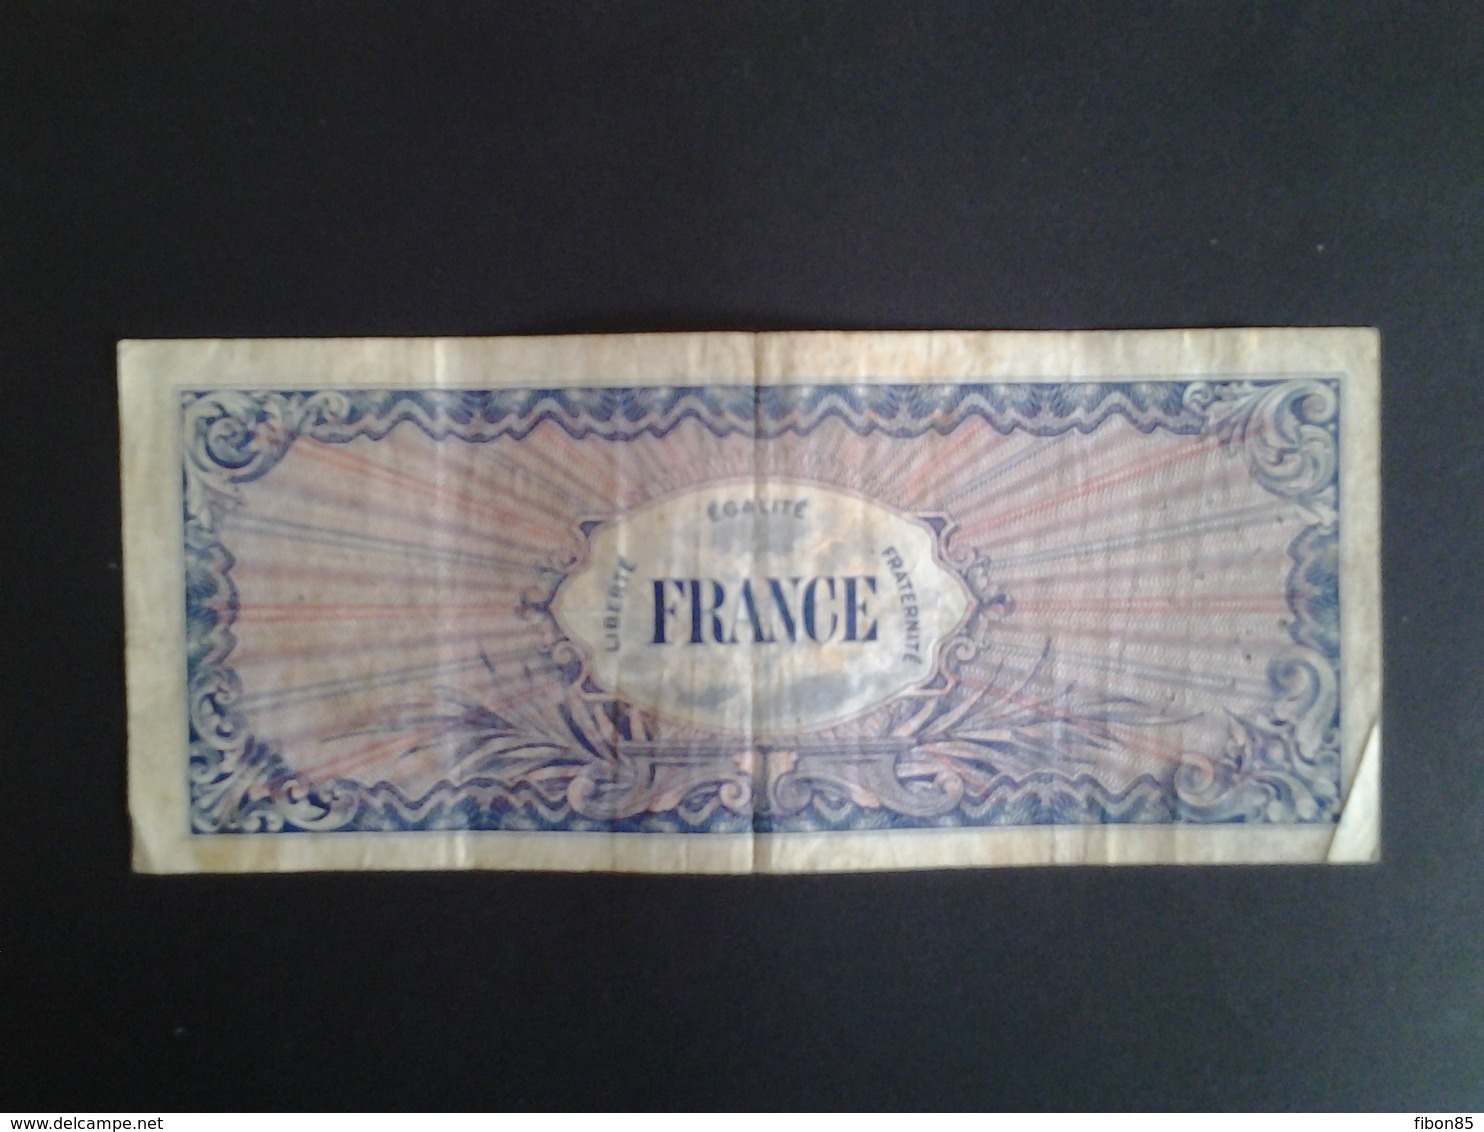 100 FRANCS FRANCE TYPE 1945  GRAND X - 1945 Verso France